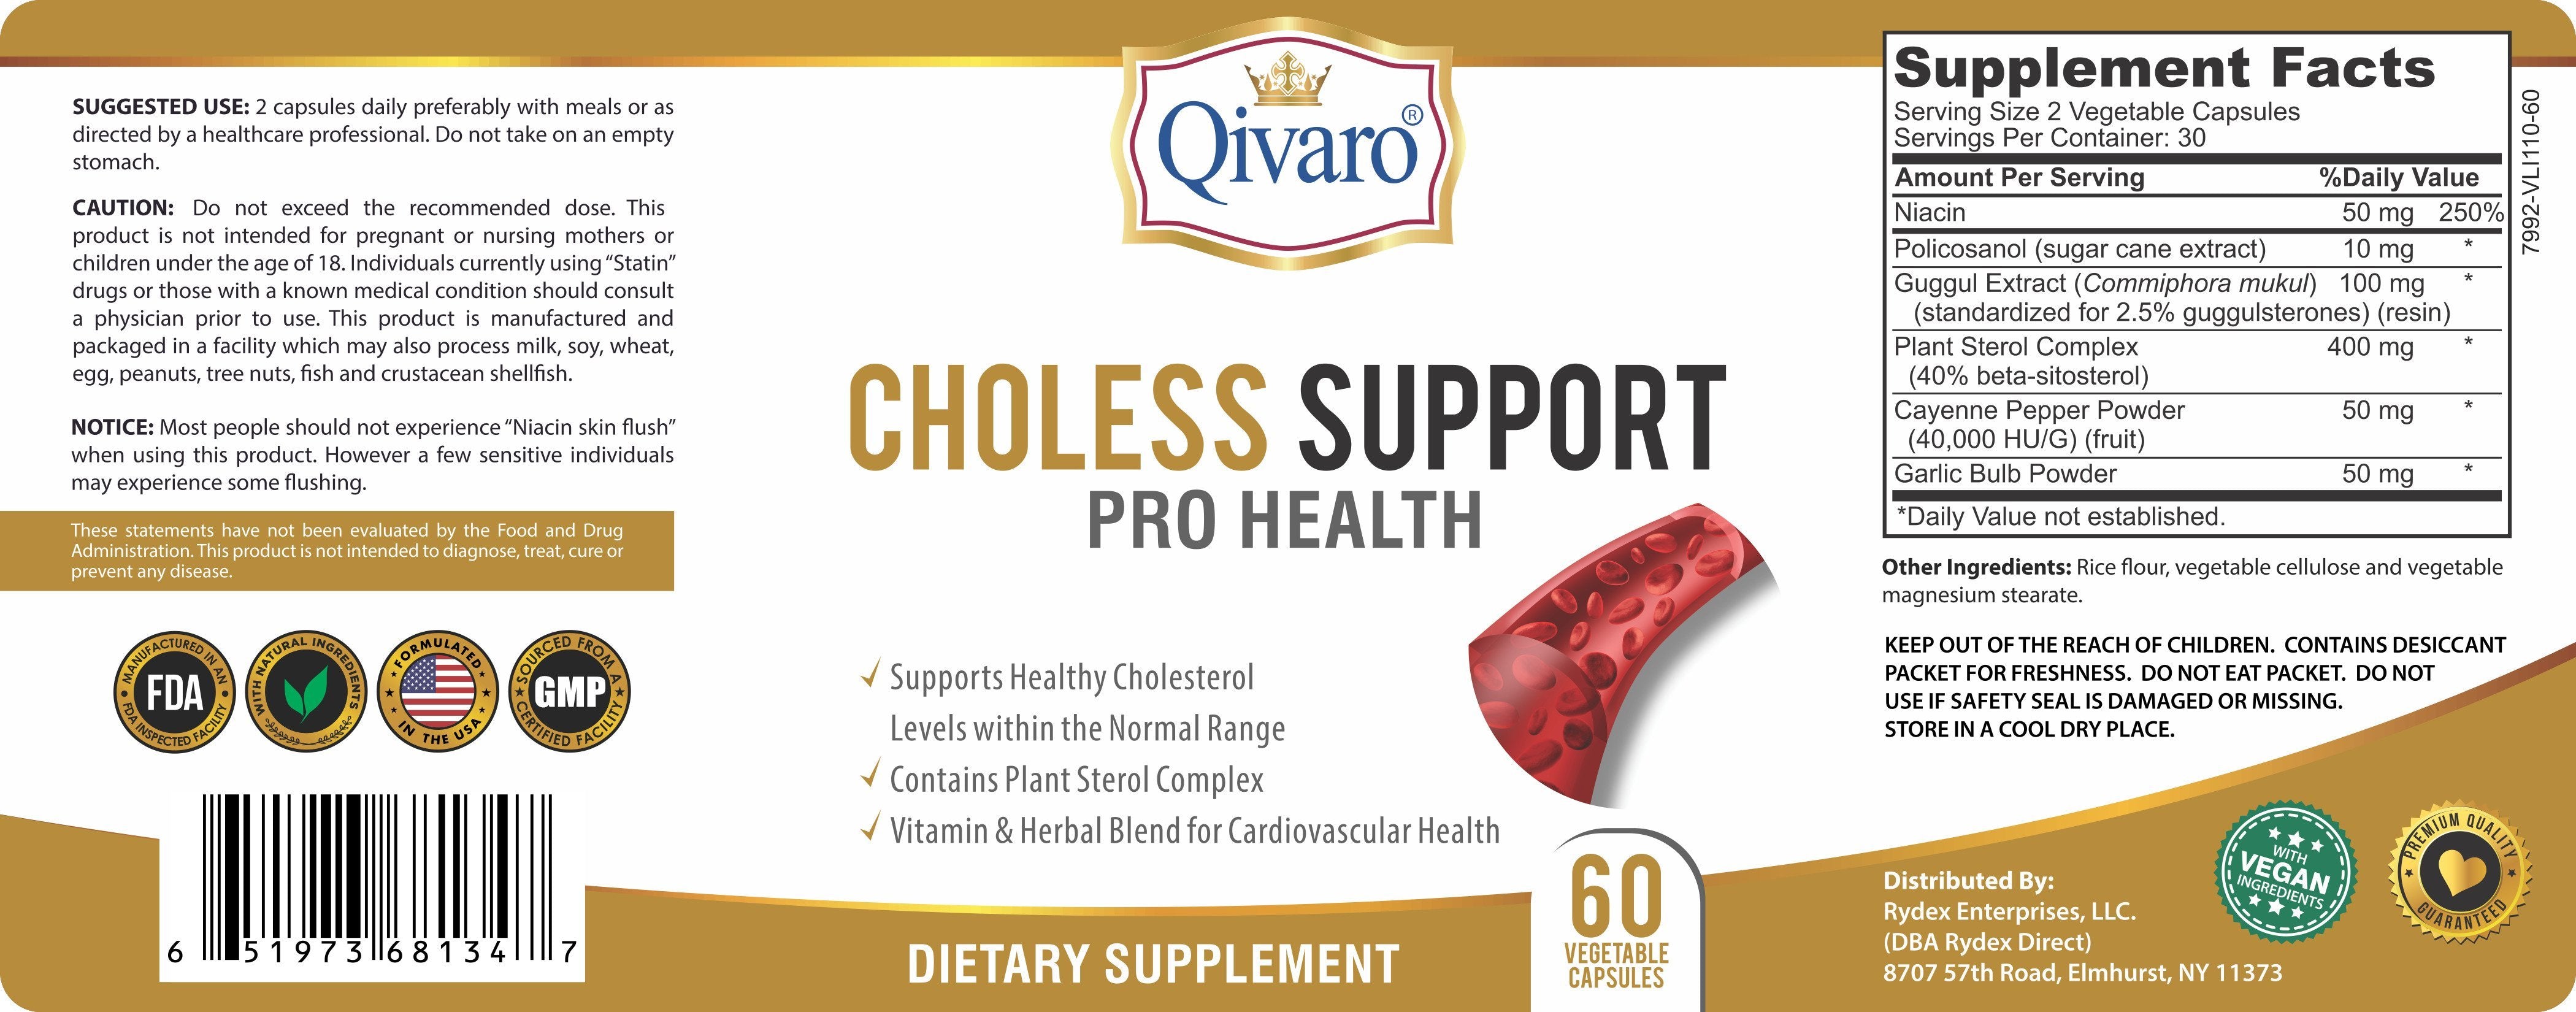 QIH22: Choless Support Pro Health